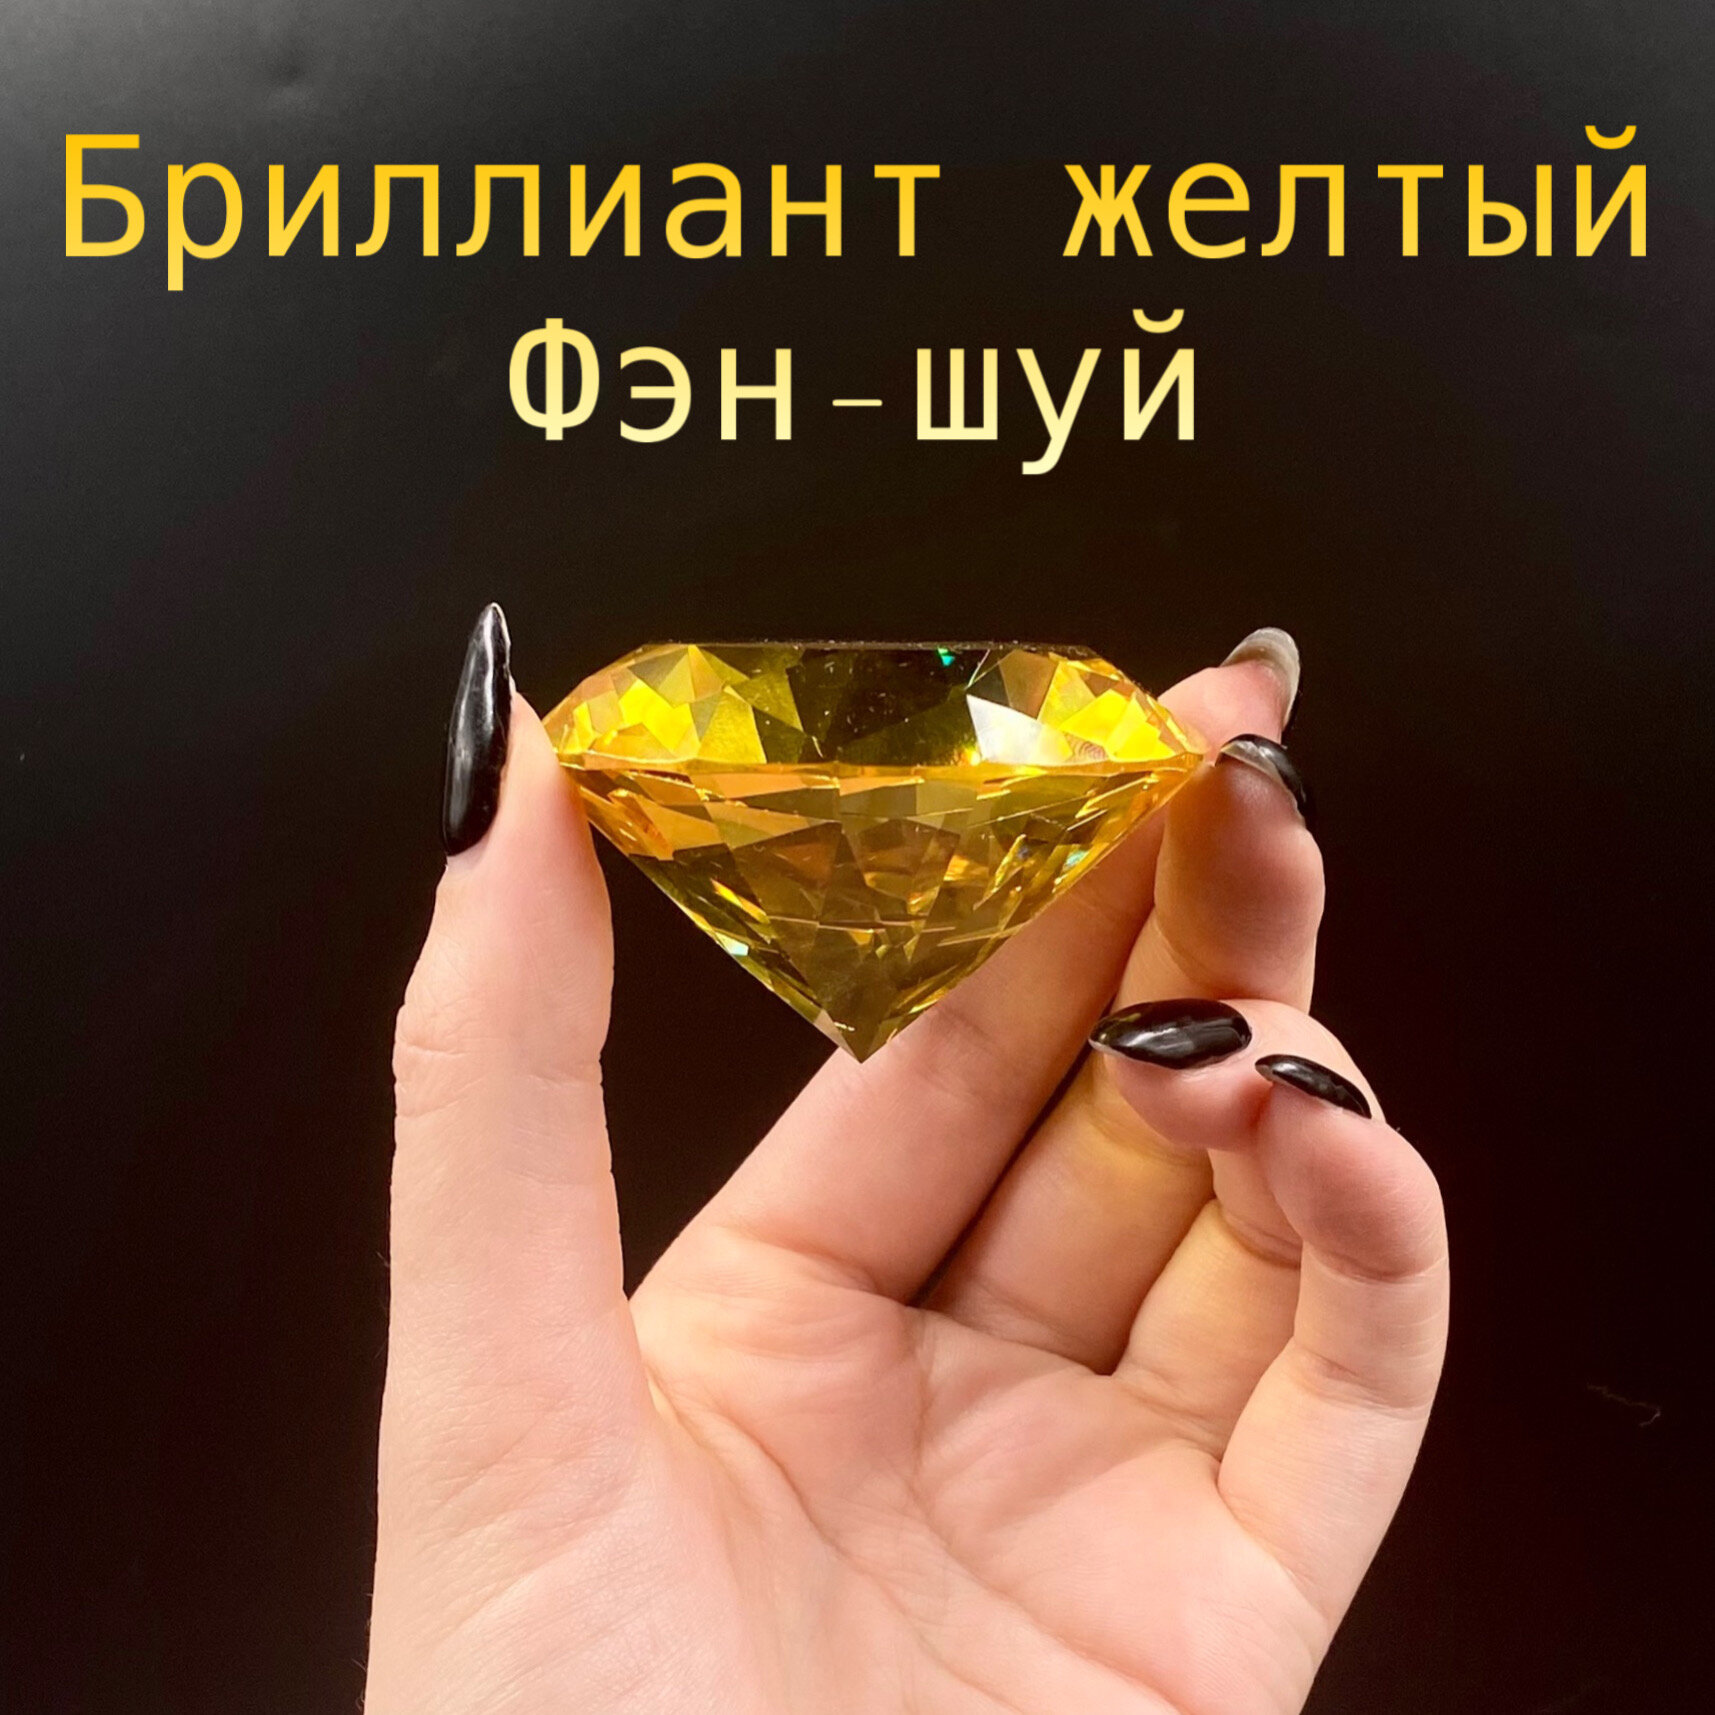 Бриллиант-хрустальный желтый "Фэн-шуй" диаметр 6 см